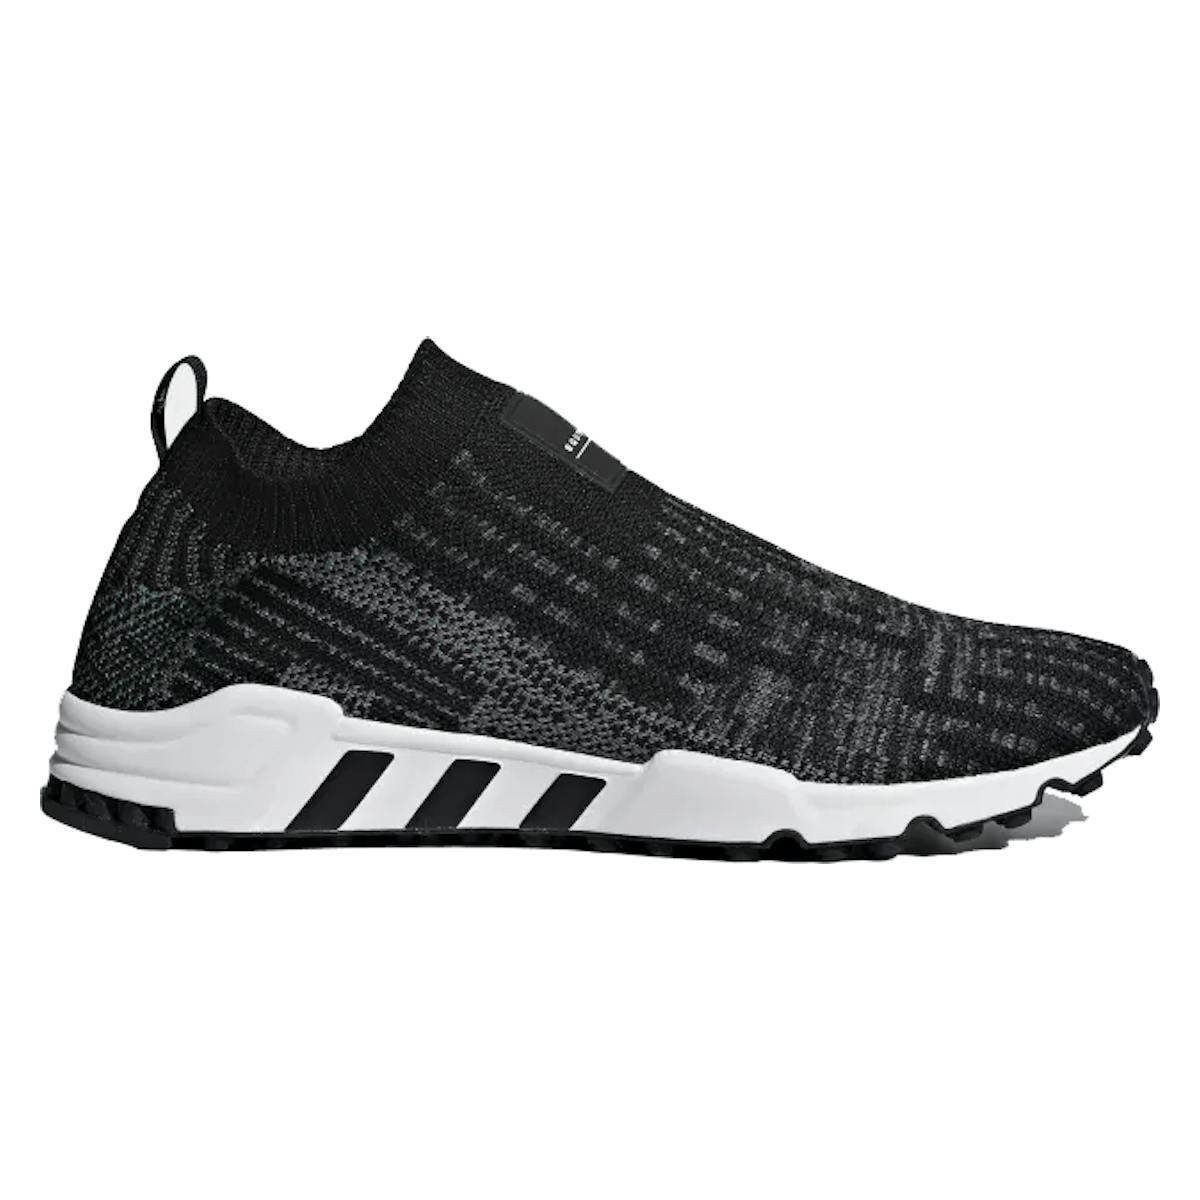 Adidas EQT Support Sock Primeknit Black/Grey/White